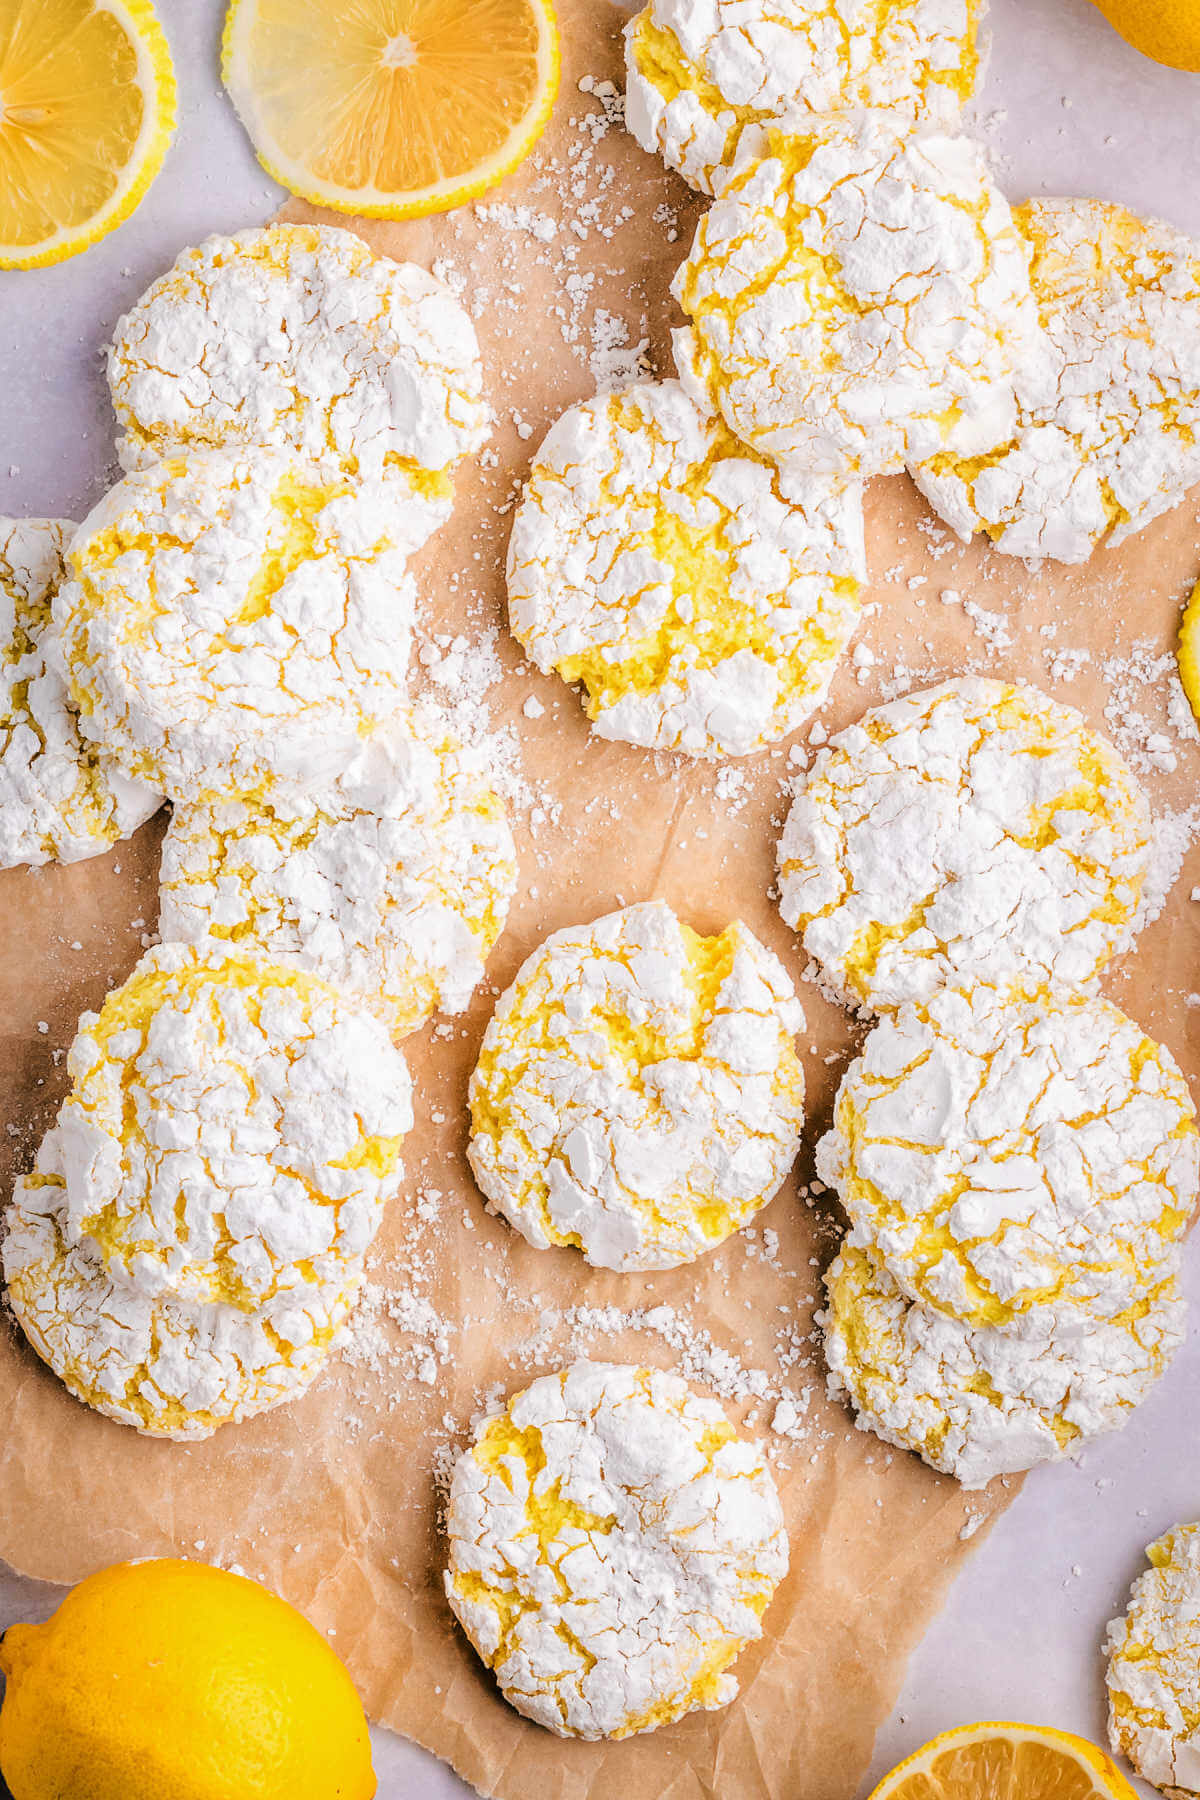 lemon crinkle cookies on parchment paper with lemon slices.